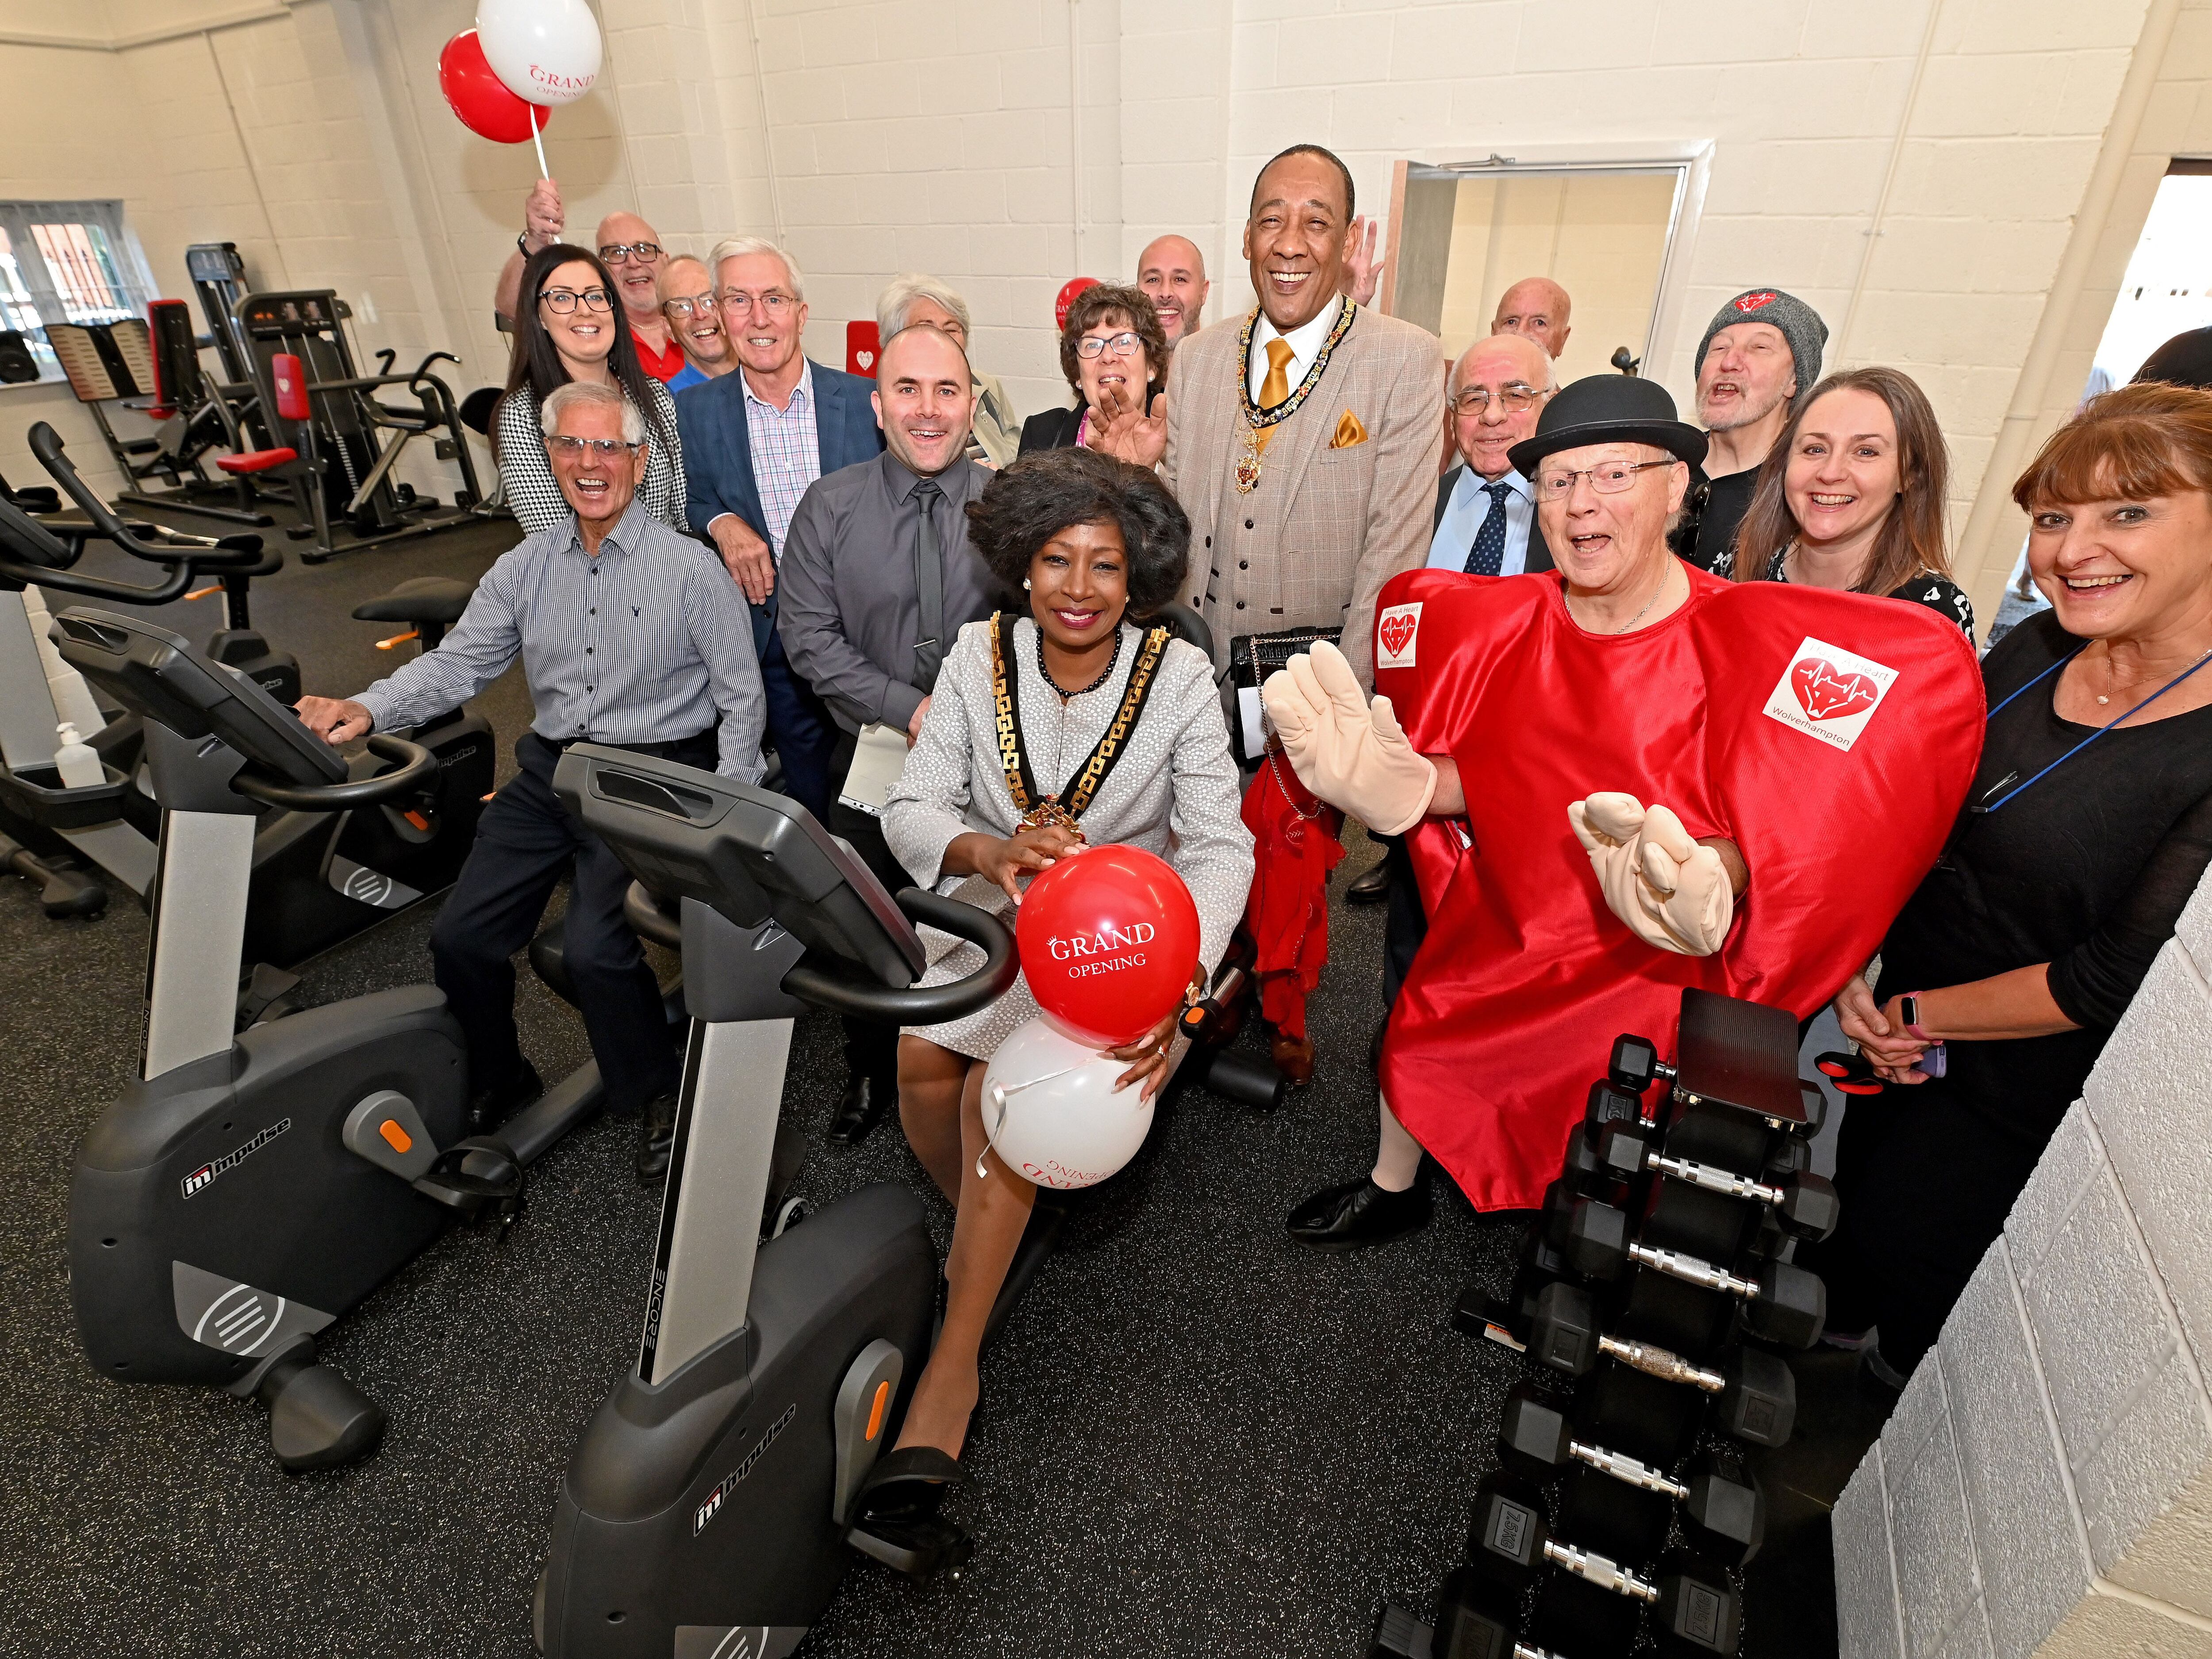 Wolverhampton's new coronary rehabilitation centre officially opened by the mayor